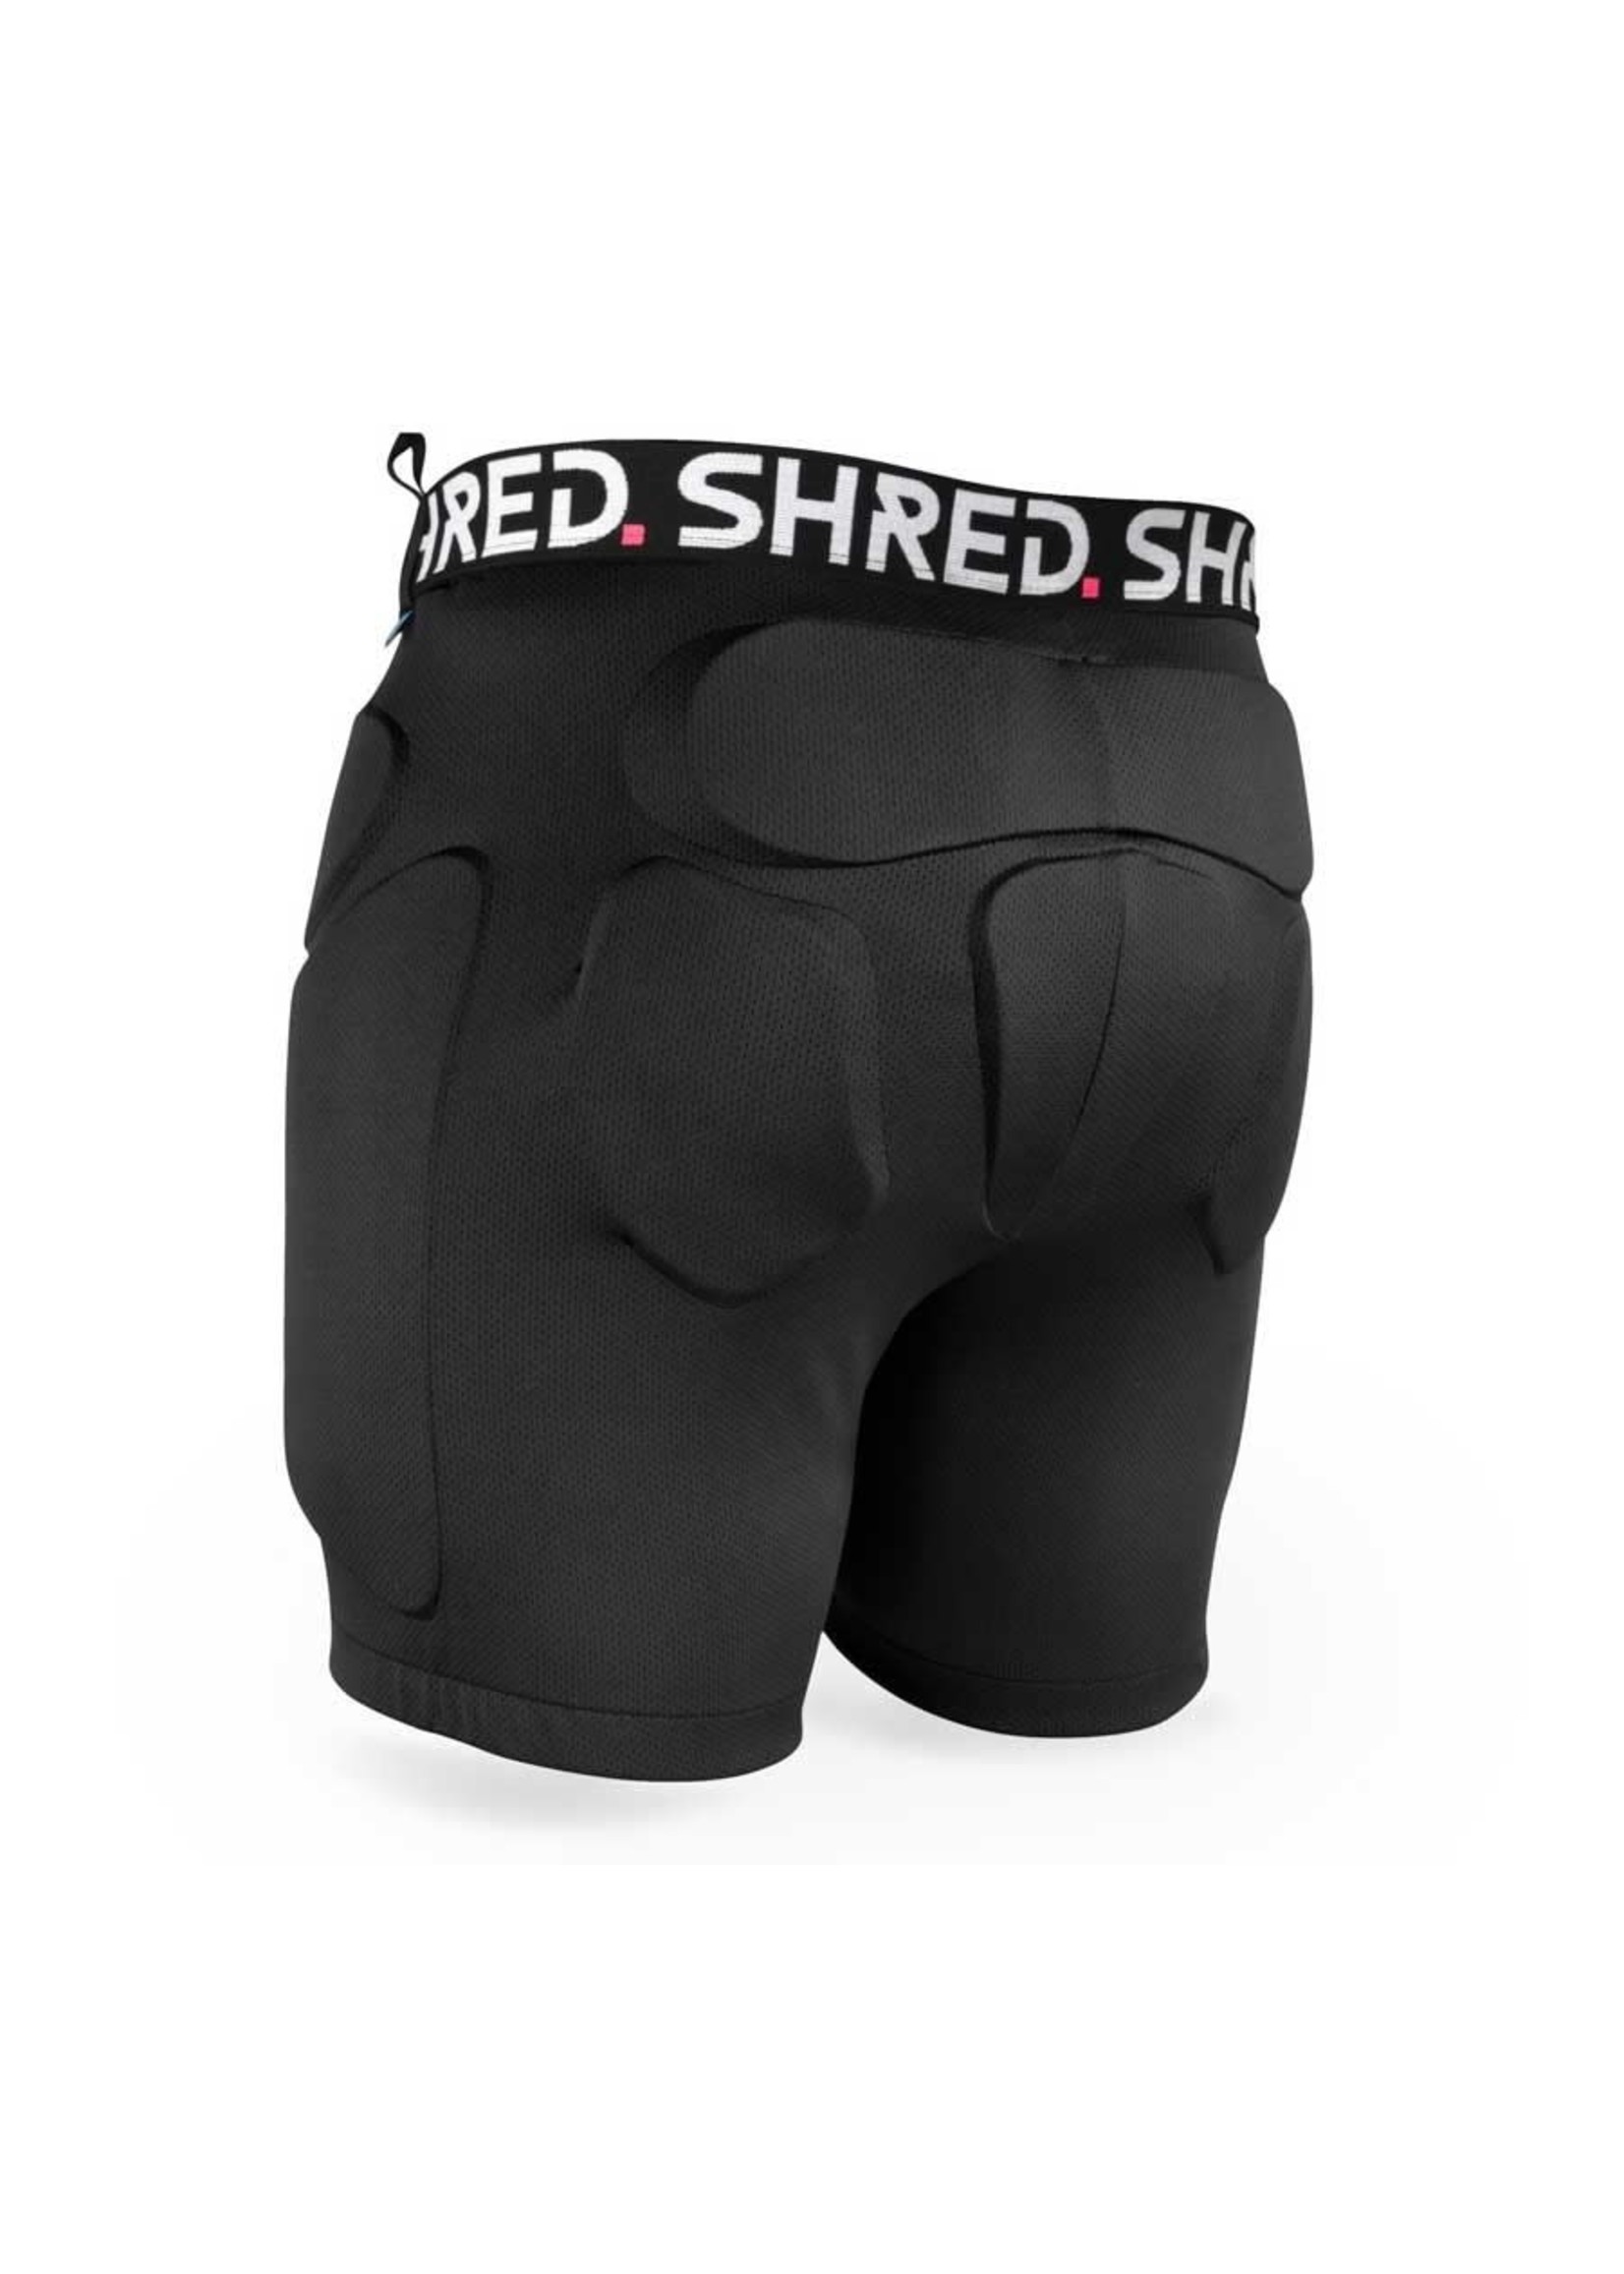 Shred Alpine Protective Shorts